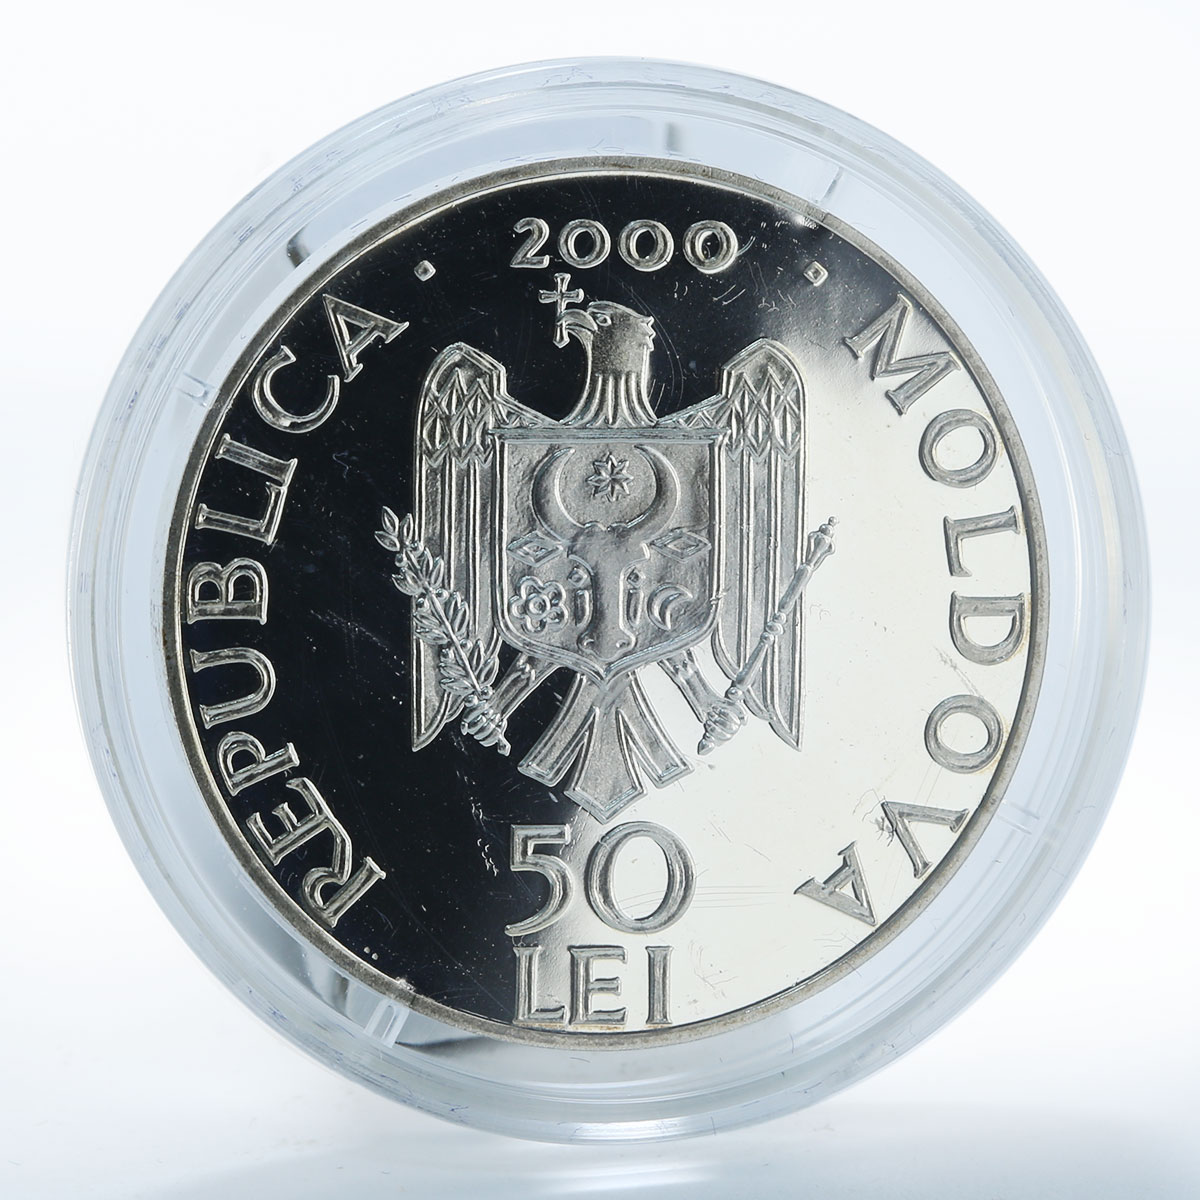 Moldova 50 lei Tabara monastery church proof coin 2000